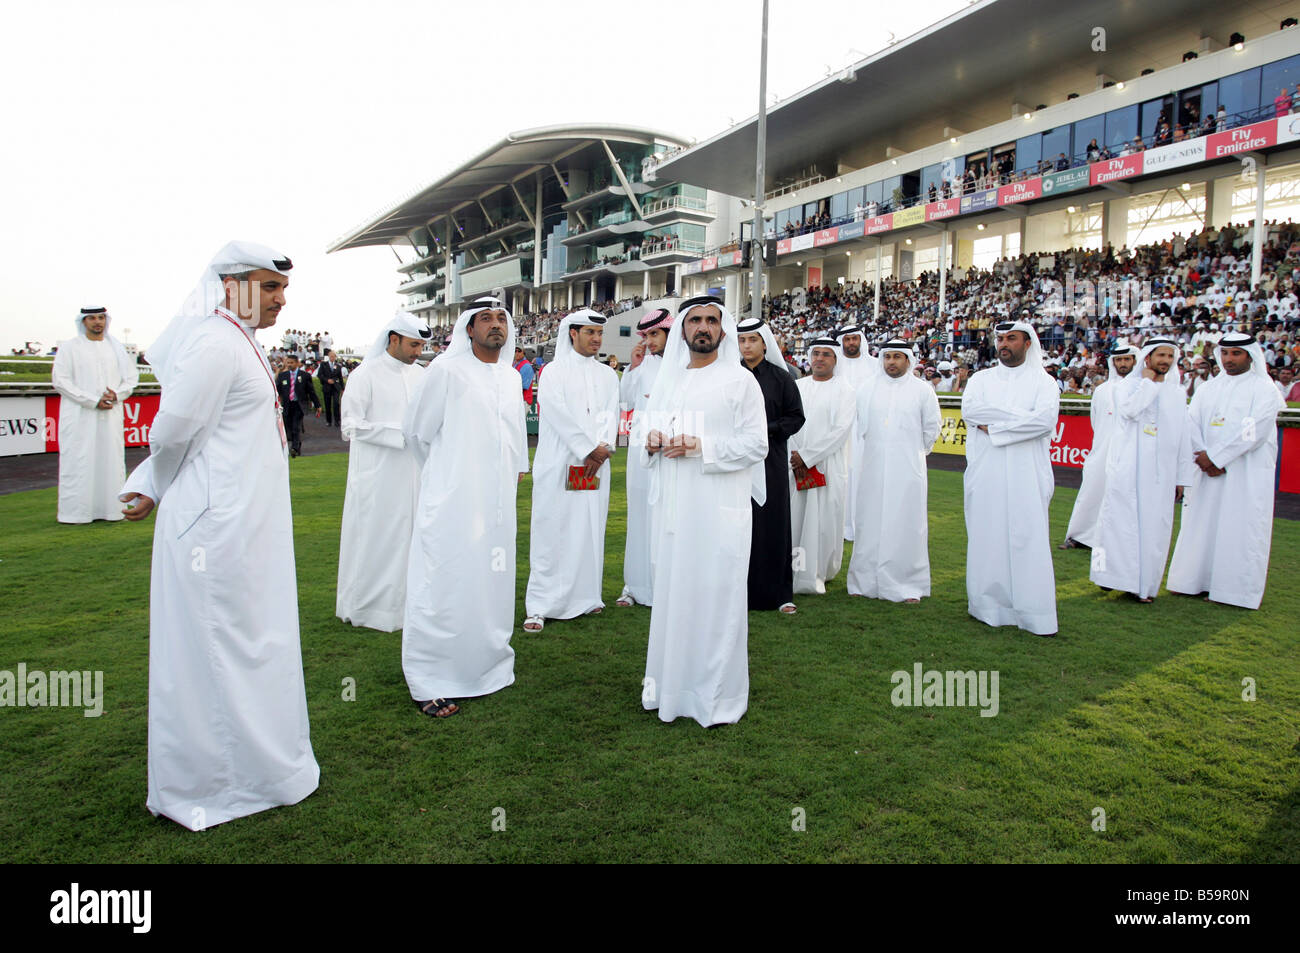 A group of Arab men, Sheikh Mohammed bin Rashid al Maktoum among them, Dubai, United Arab Emirates Stock Photo